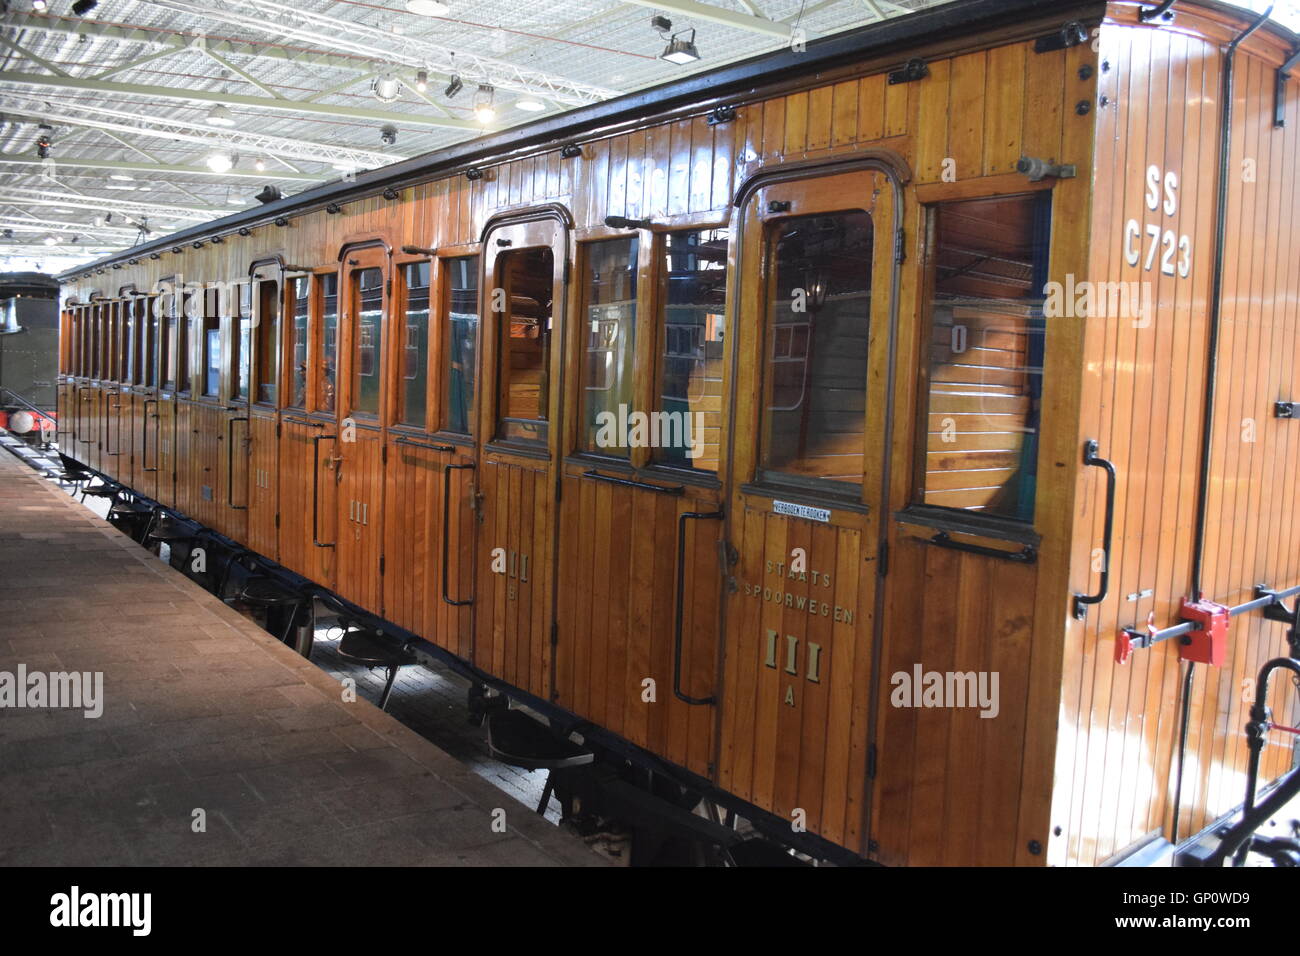 Dutch railway museum in Stock Photo 